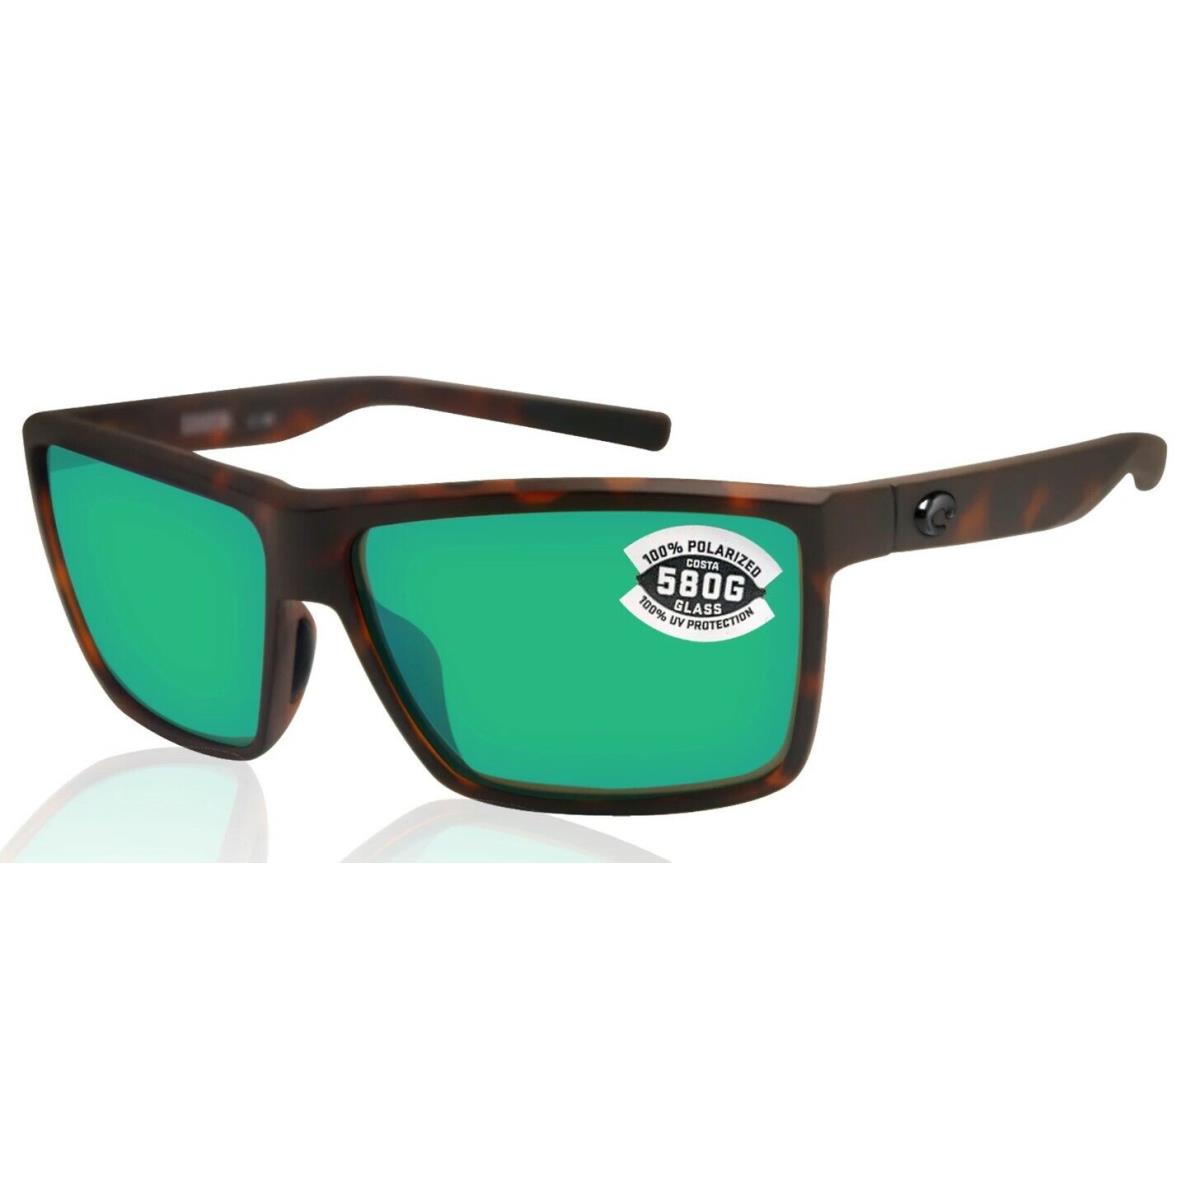 Costa Del Mar Rinconcito Tortoise Polarized Green Sunglasses 06S9016 901622 60 - Frame: Brown, Lens: Green